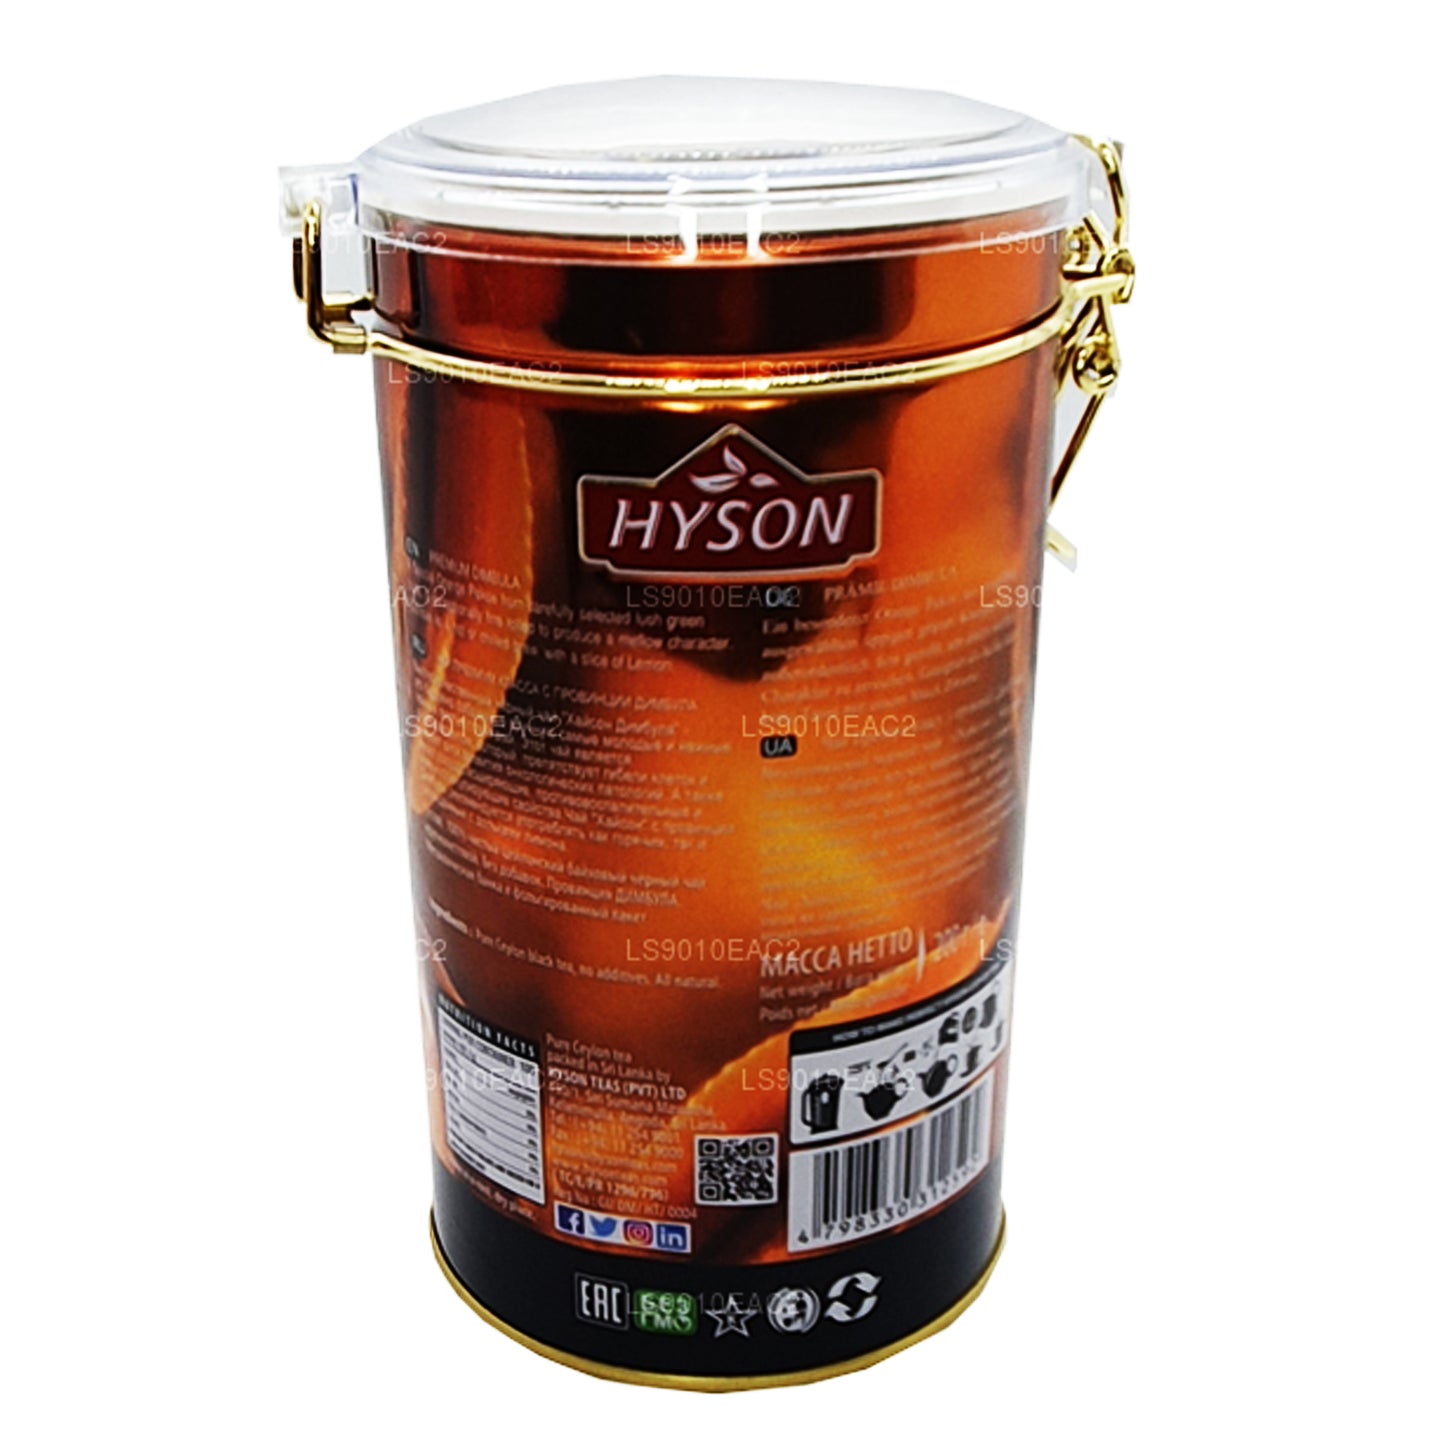 Hyson Premium Dimbulla (200g)